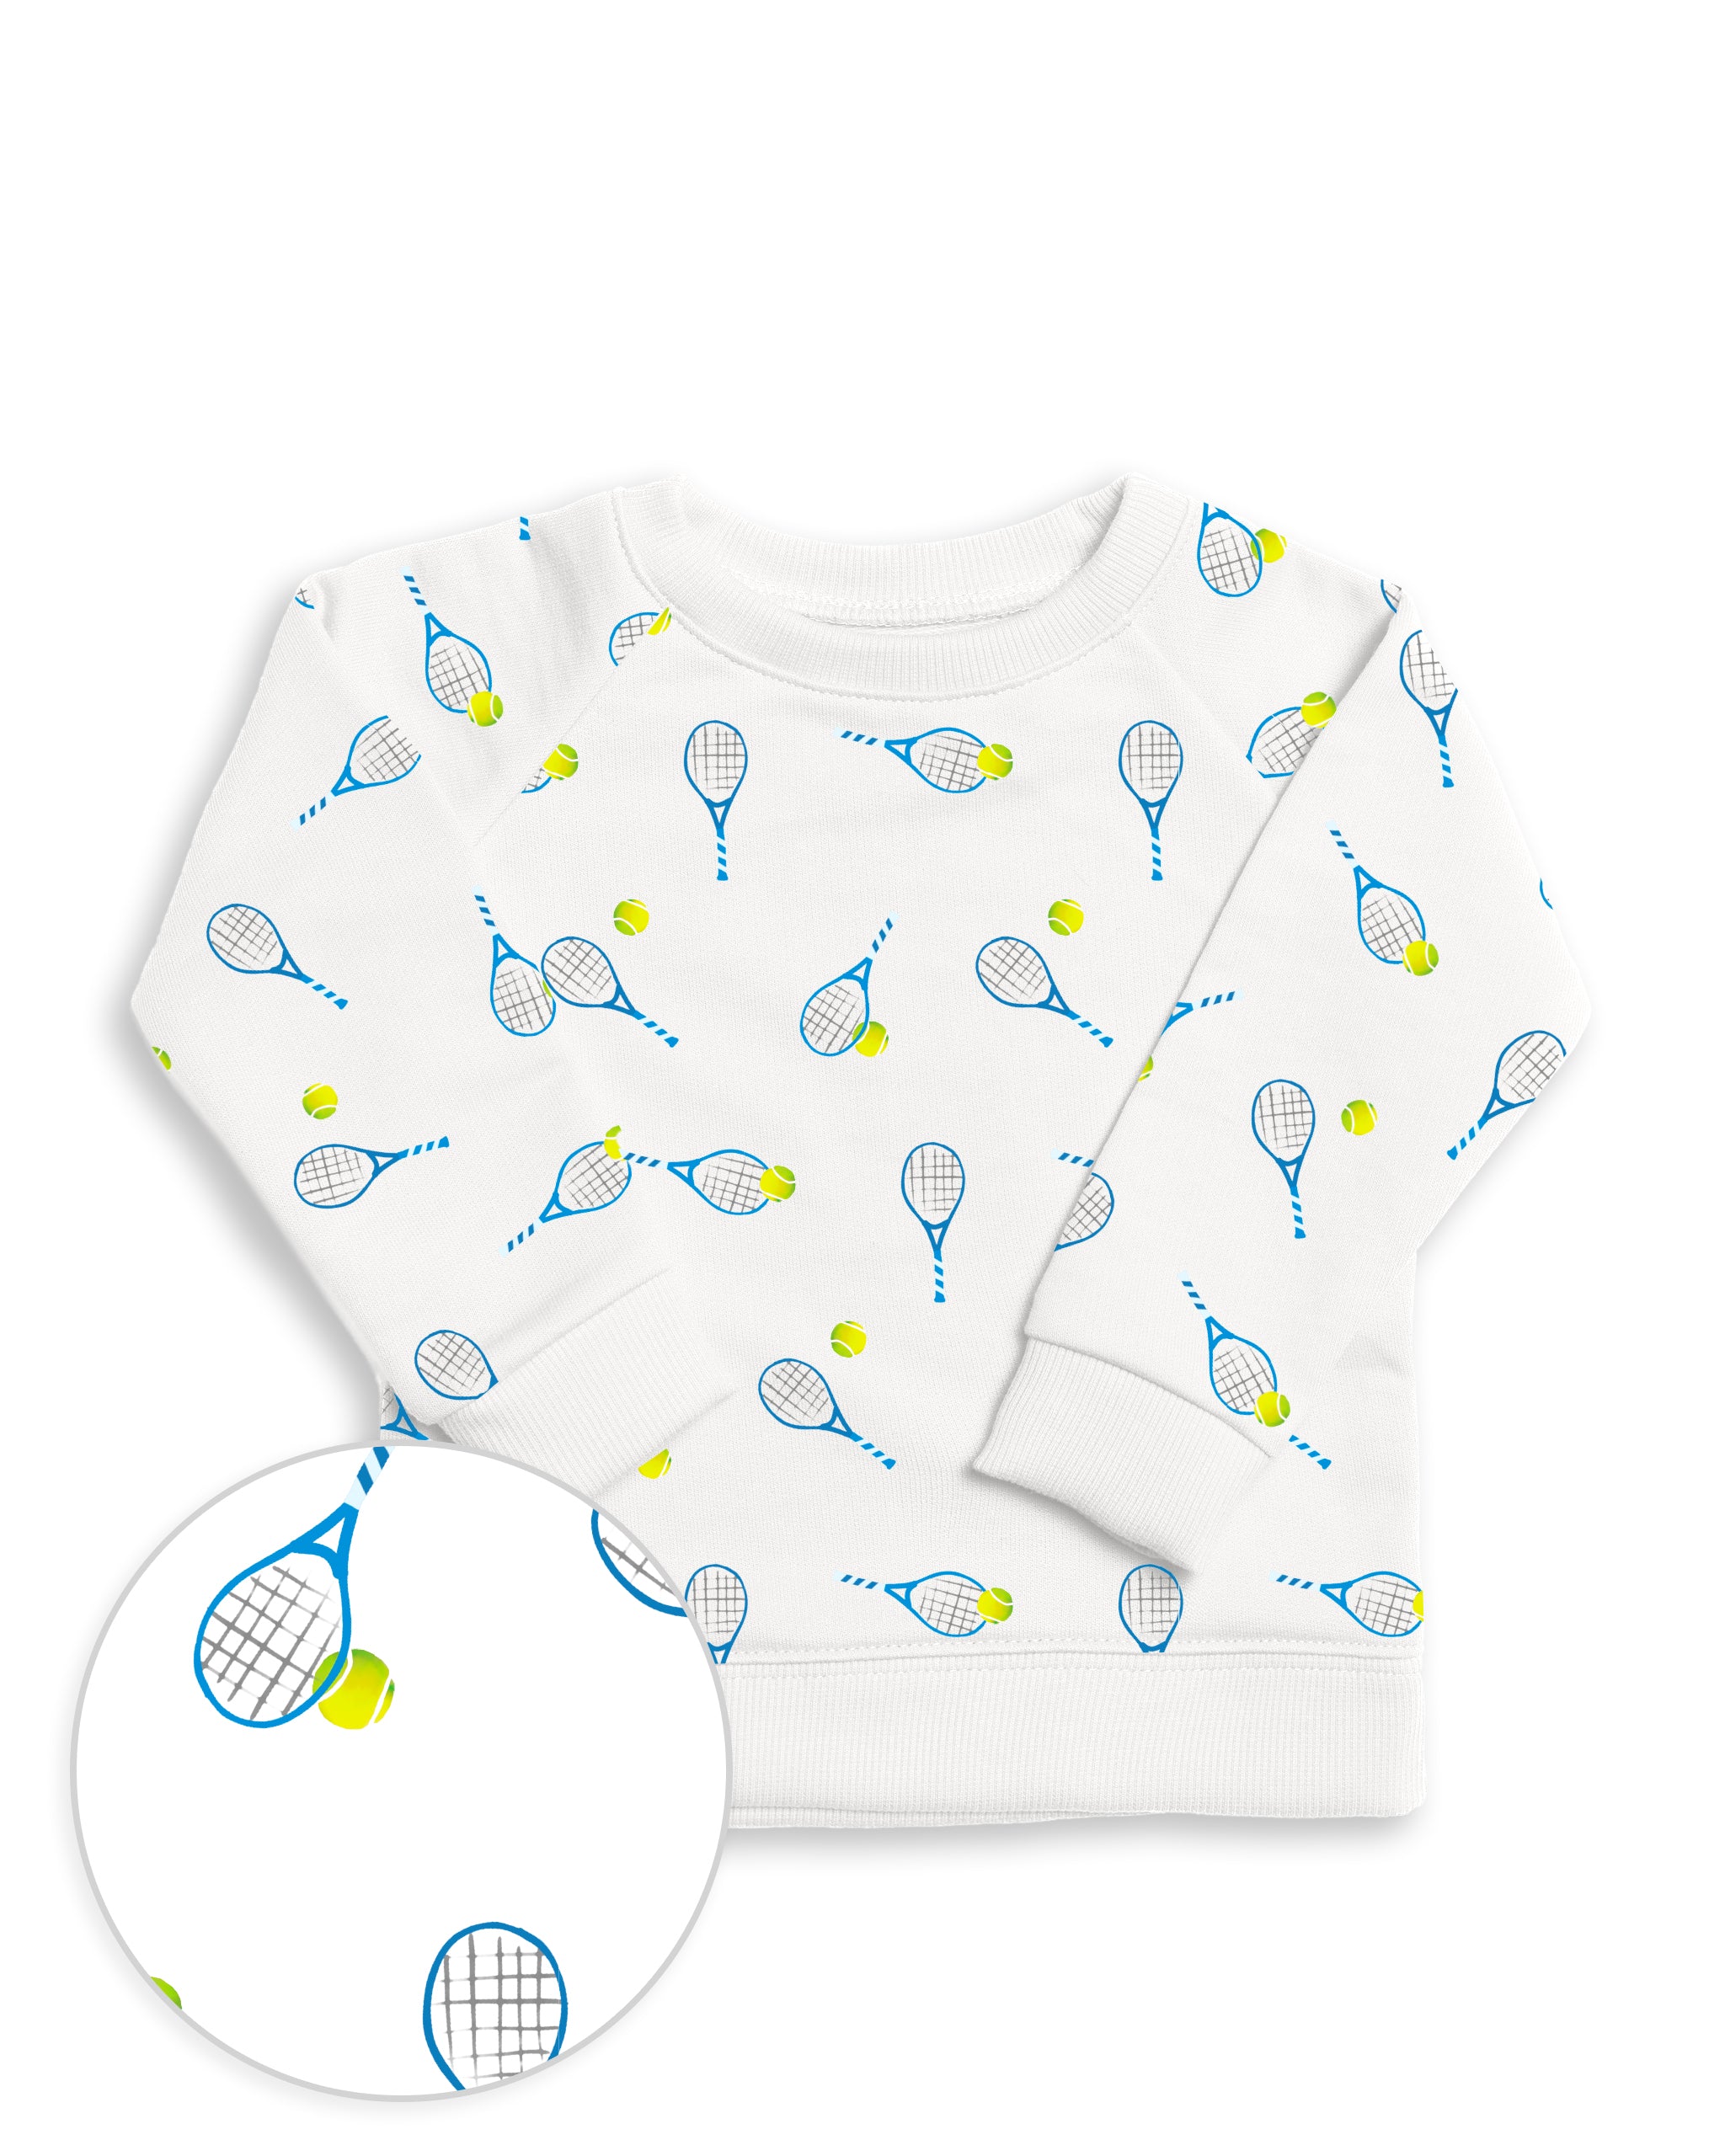 The Organic Printed Pullover Sweatshirt [Tennis Grand Slam]